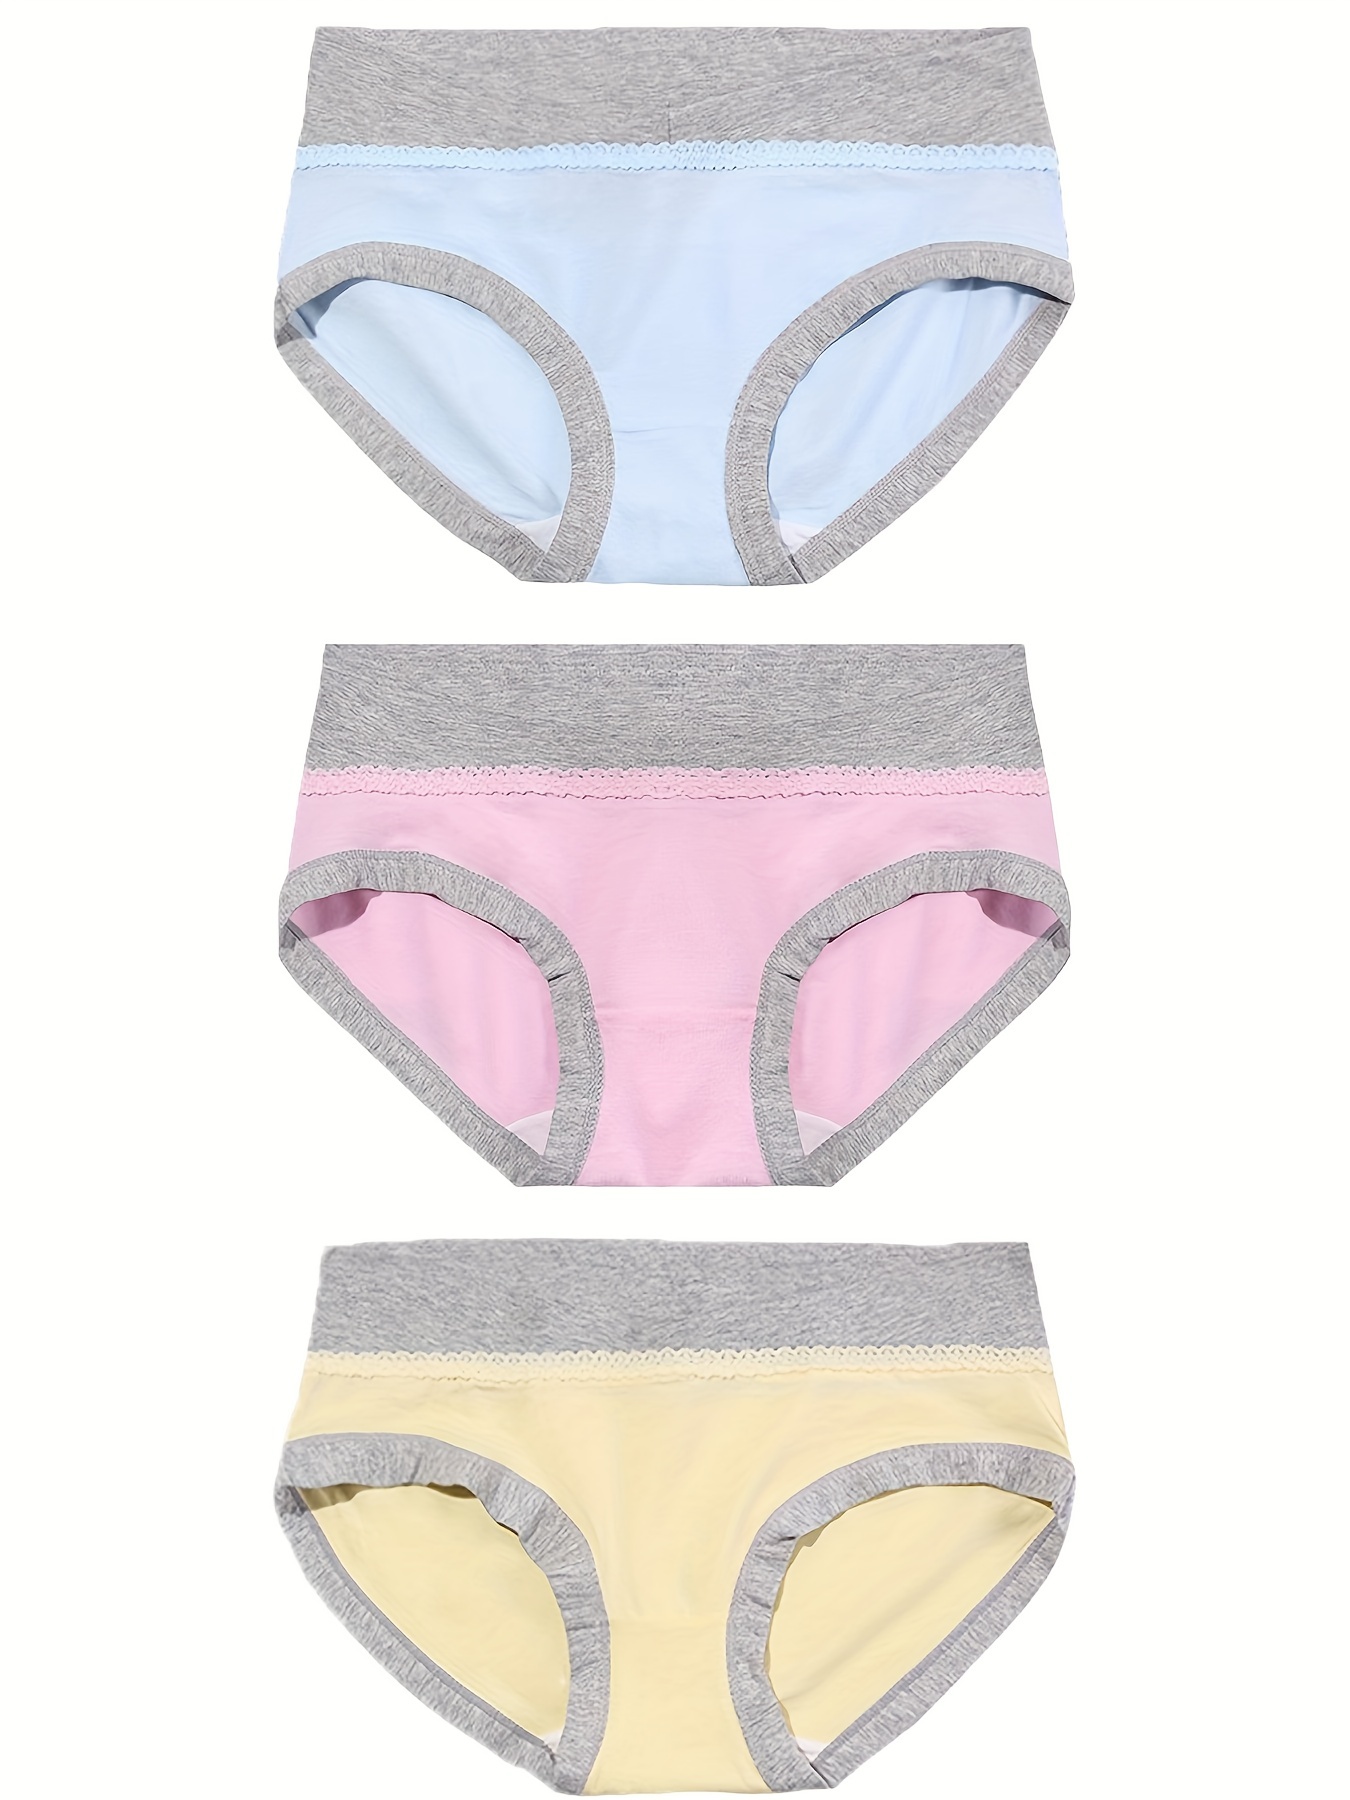 3pcs Pregnant Women's Seamless U-shaped Maternity Underwear For Pregnancy